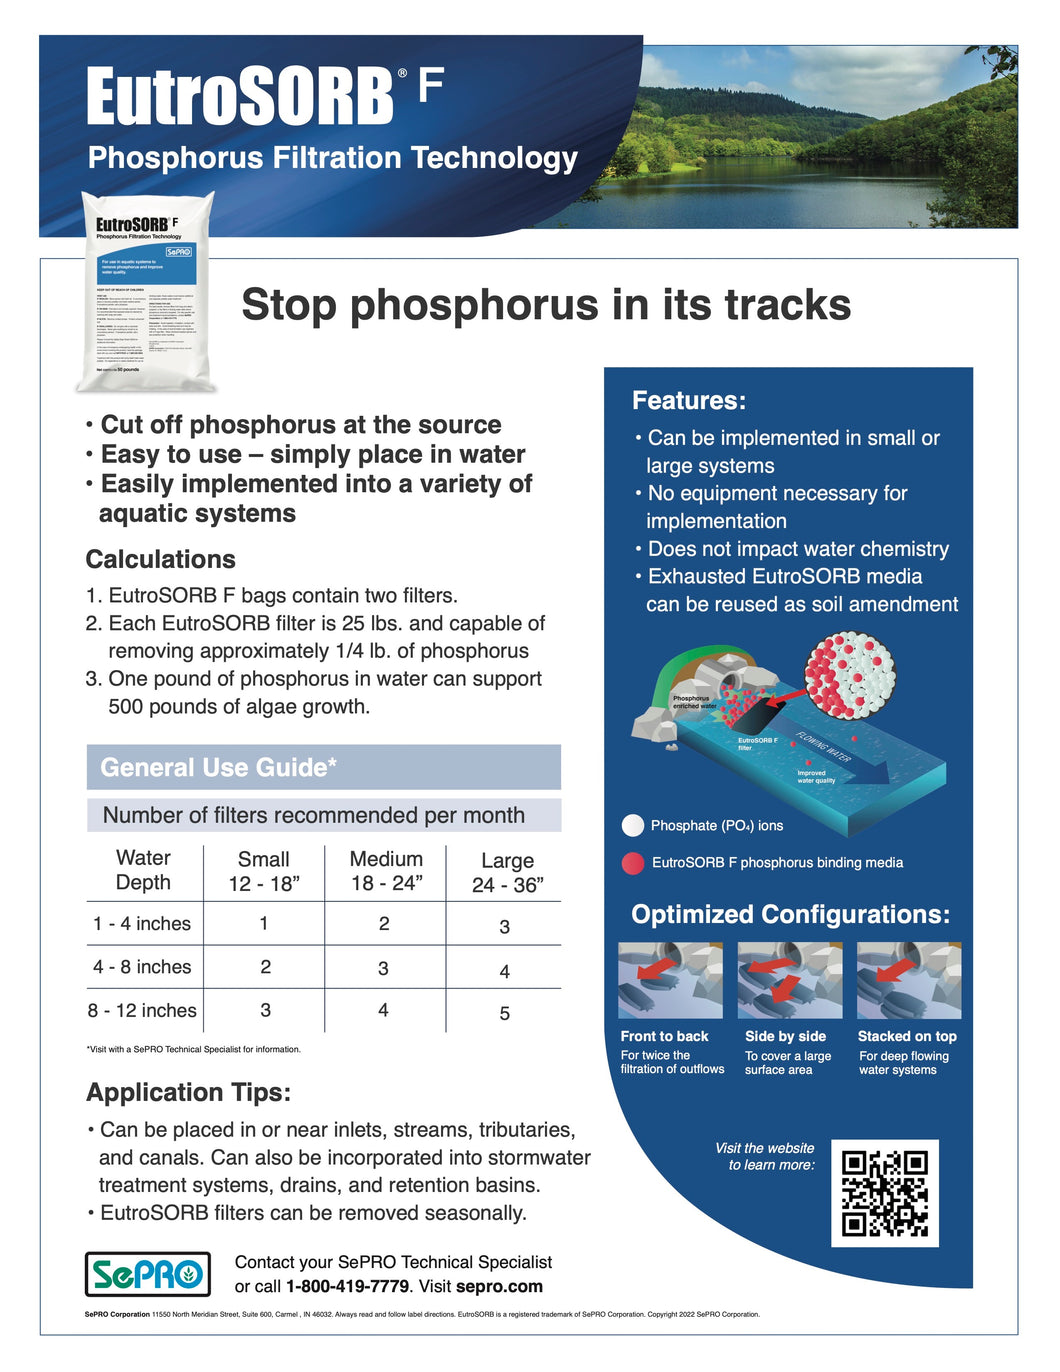 EutroSorb - Filter - Stops Phosphorus in its Tracks